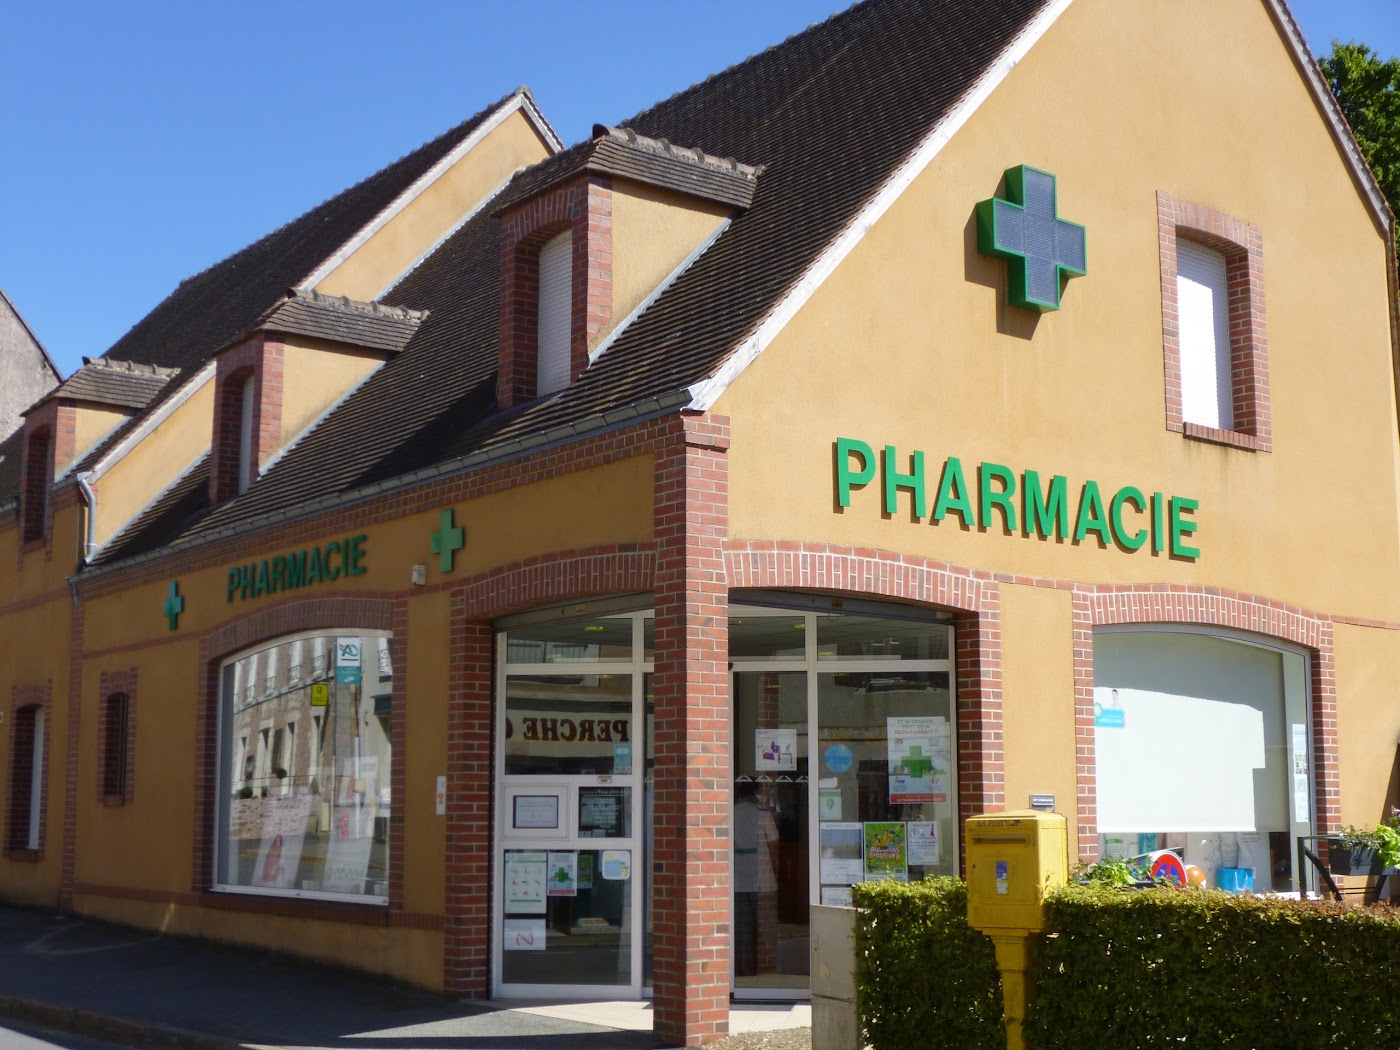 Pharmacie Leroy-Renou